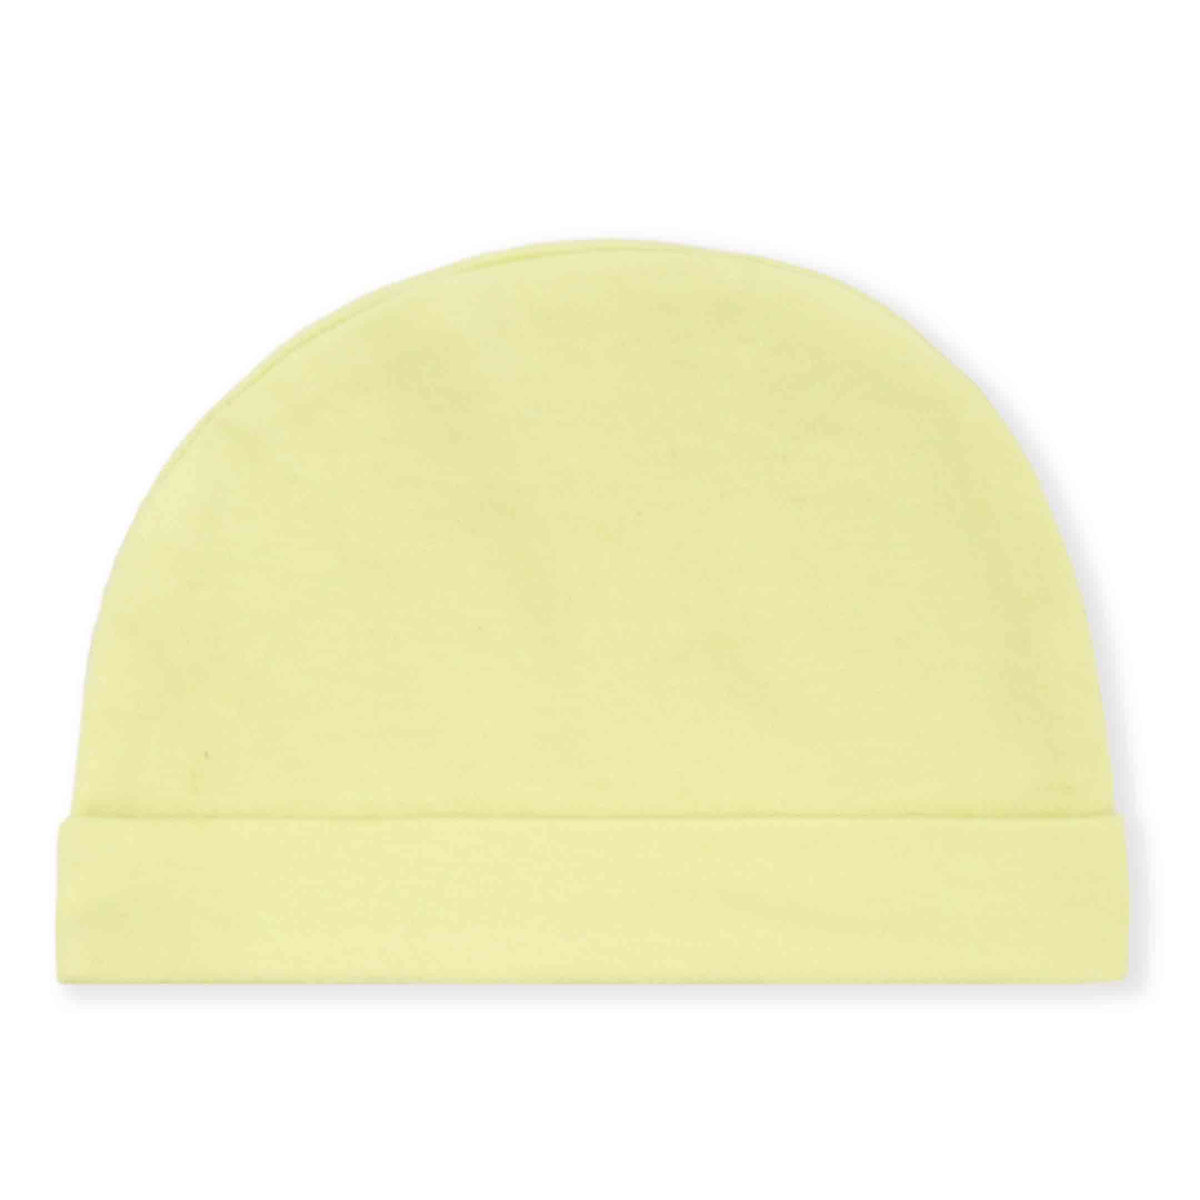 Pastel yellow headcover